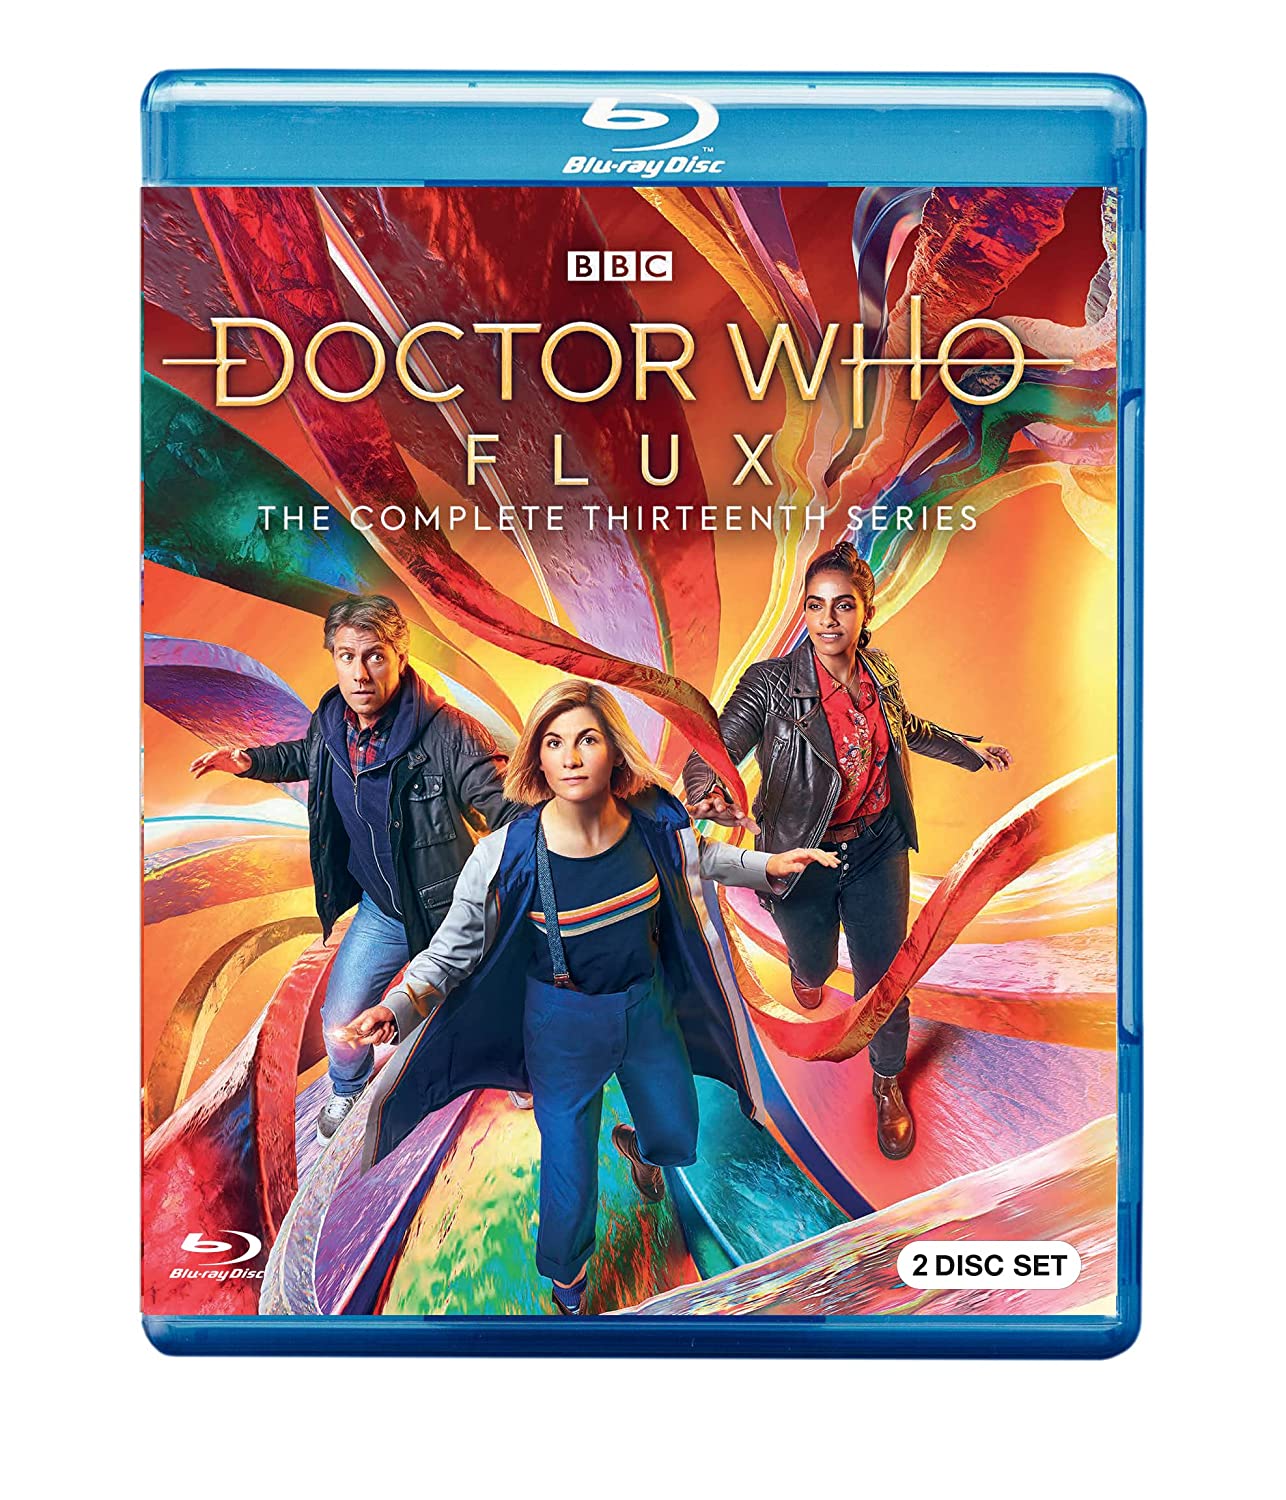 Doctor Who Complete Thirteenth Season $18.99 at Amazon